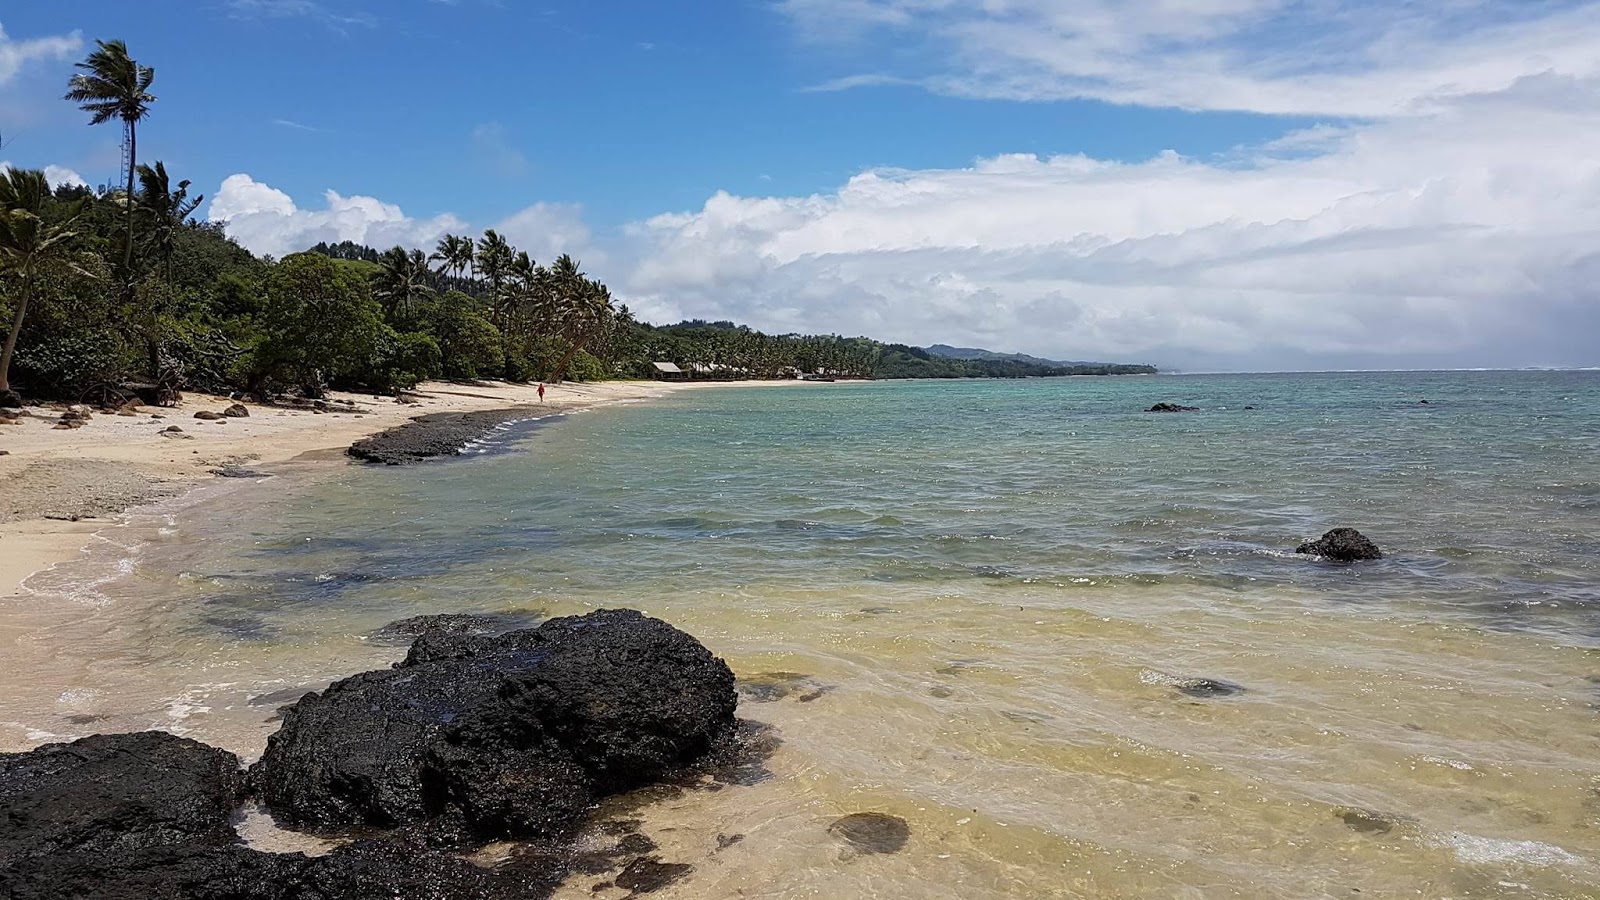 Foto av Fiji Hideaway Beach hotellområde